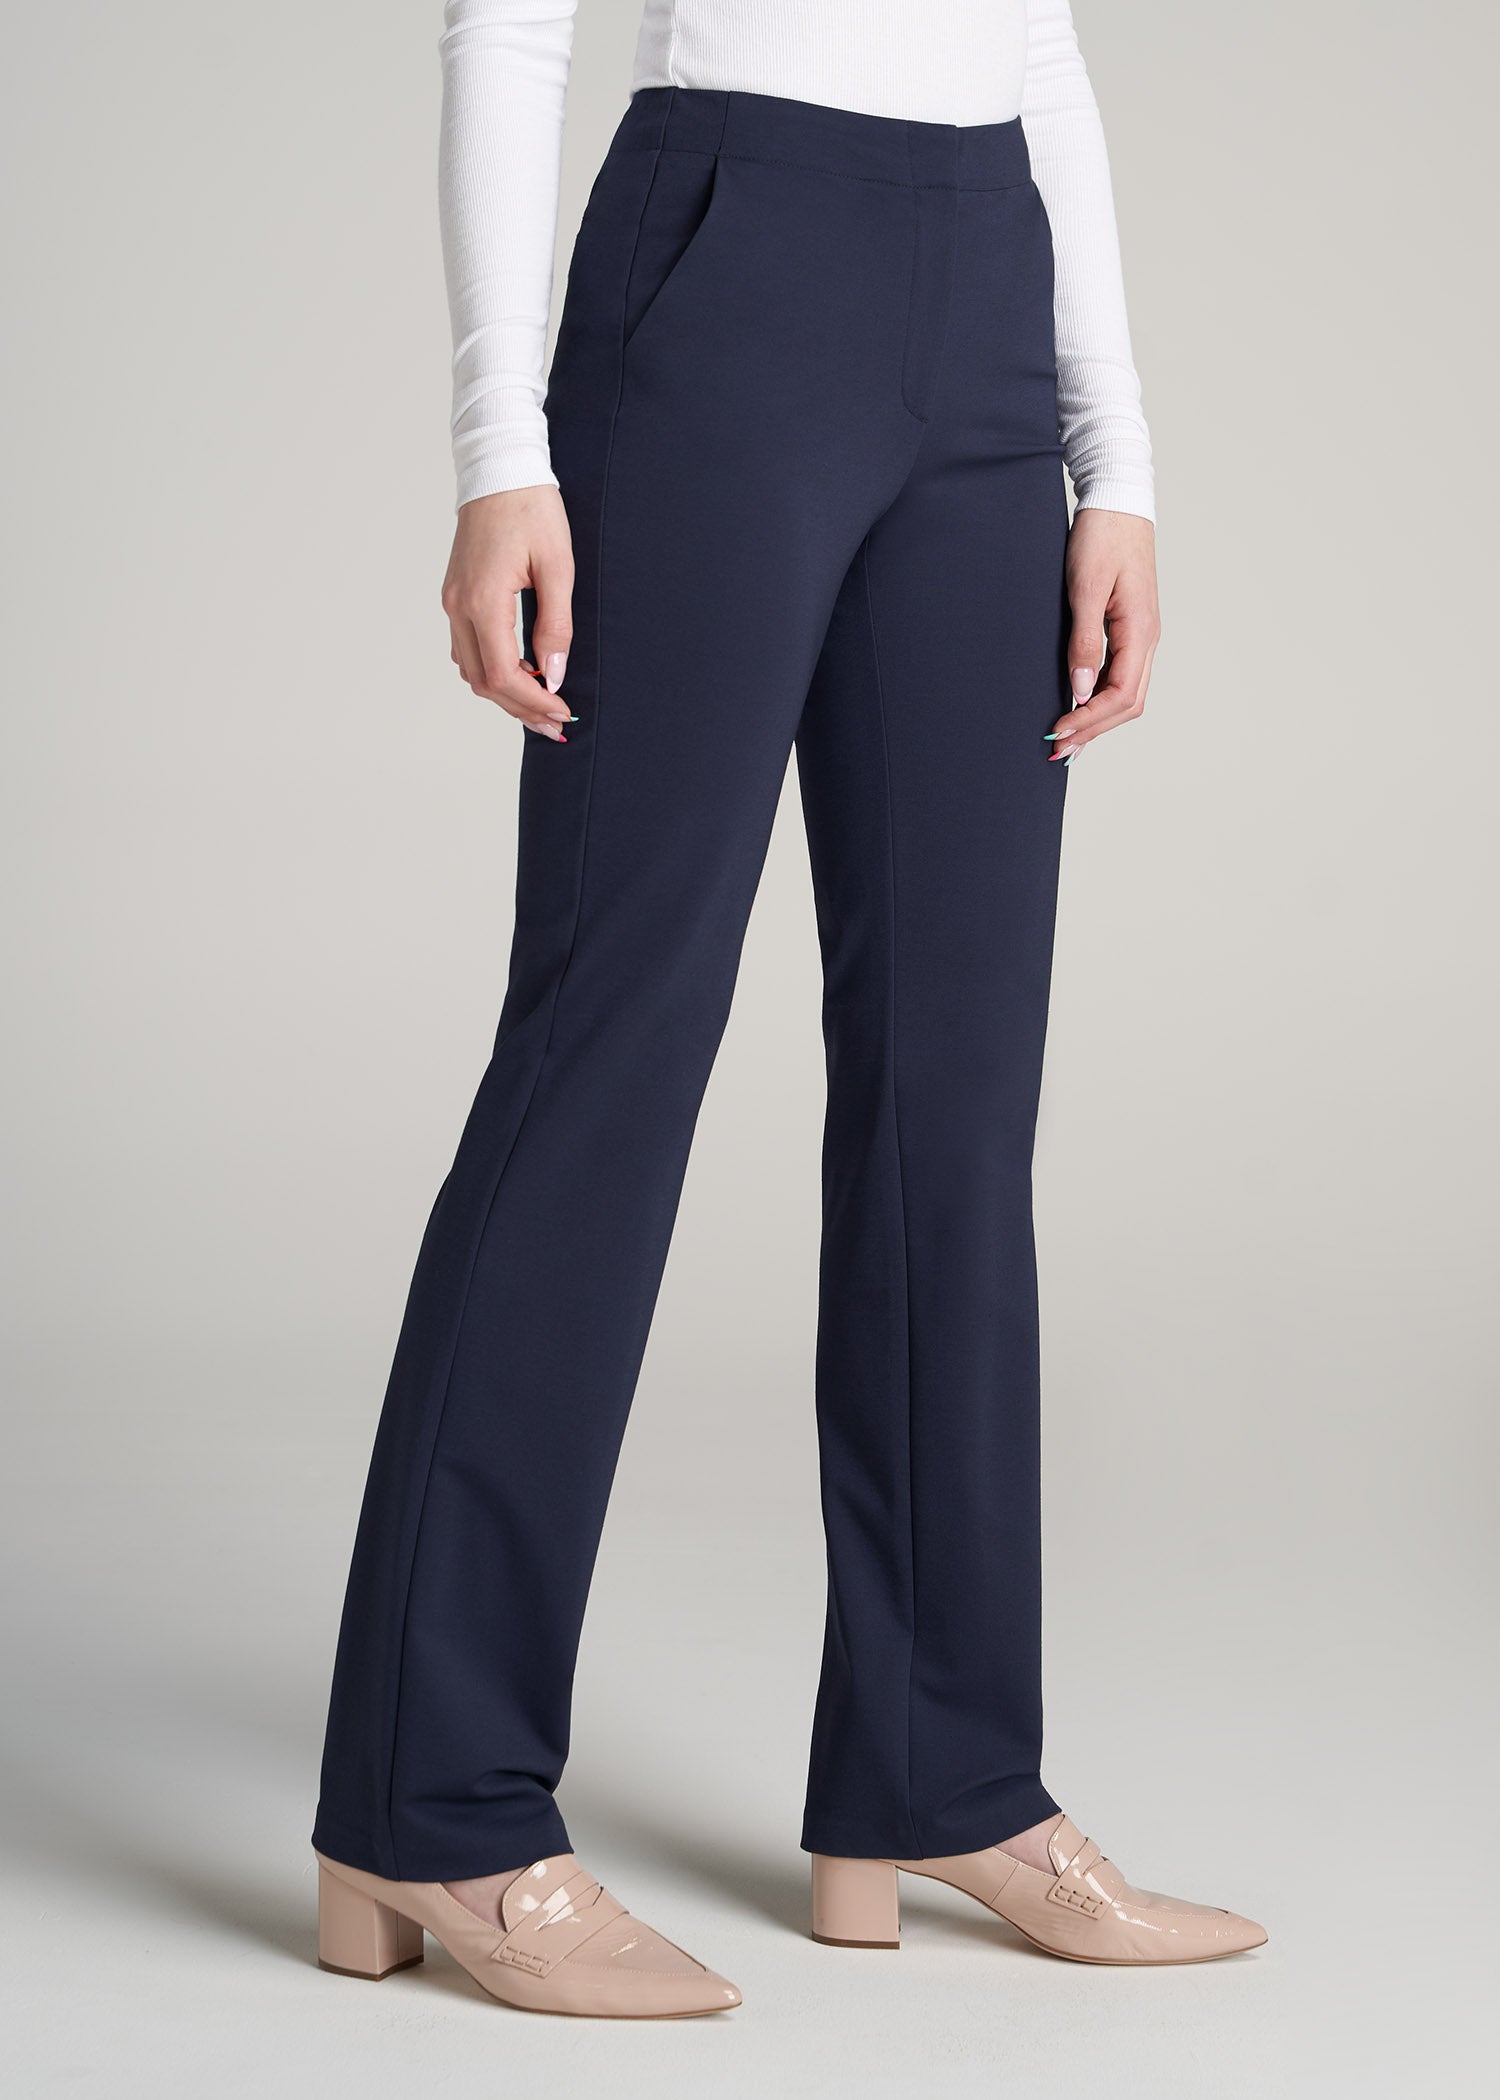 Slim Straight Leg Dress Pants for Tall Women in Navy 2 / Tall / Navy